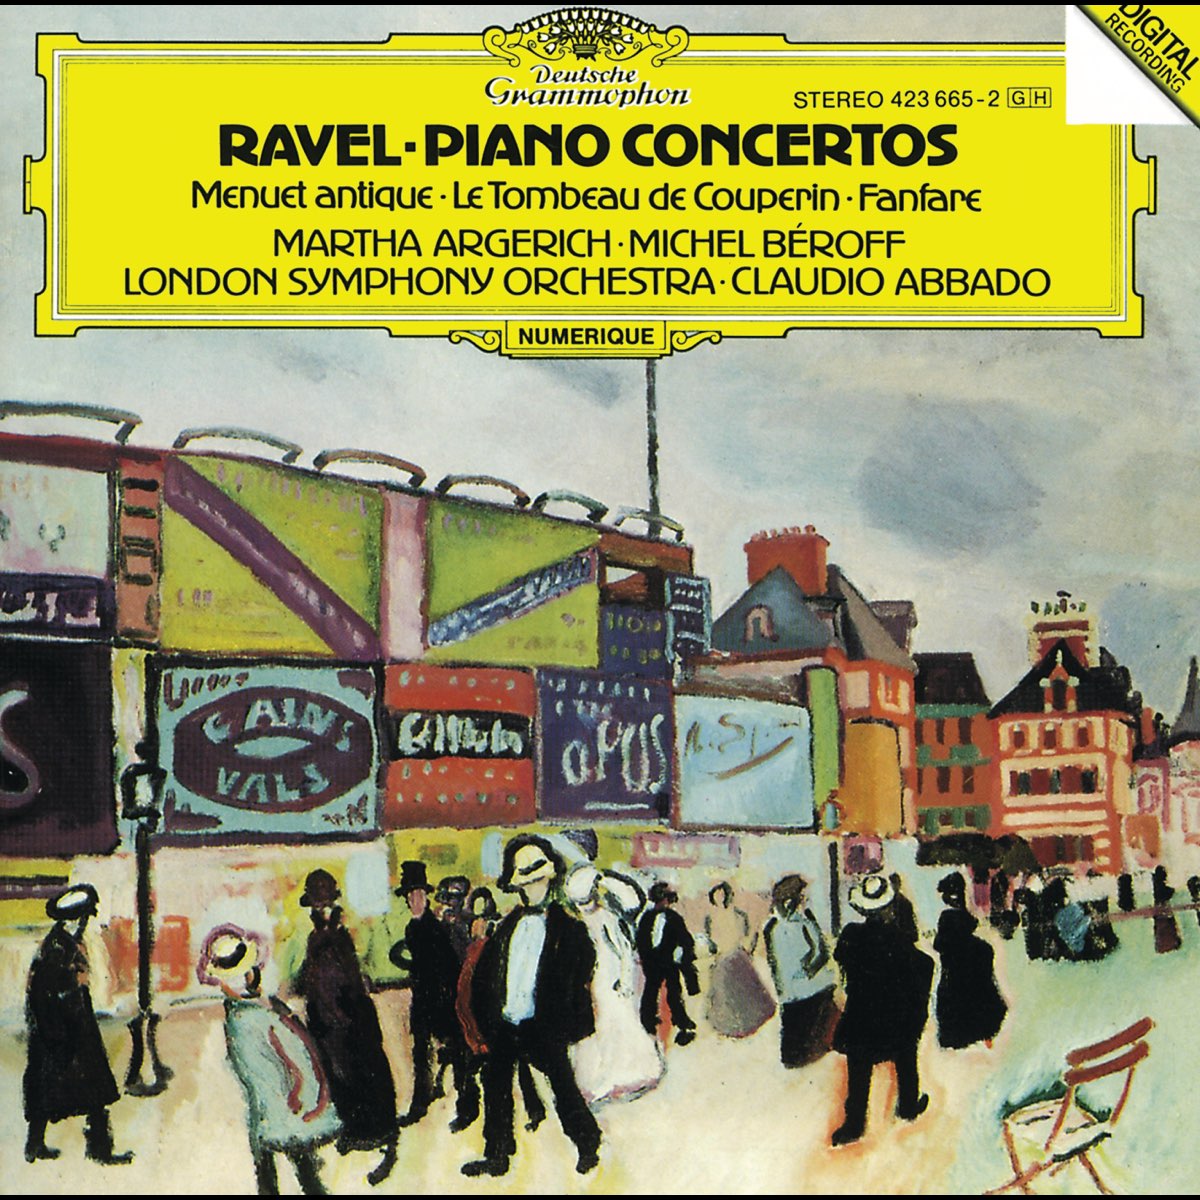 ‎Ravel Piano Concertos Album by Claudio Abbado, London Symphony